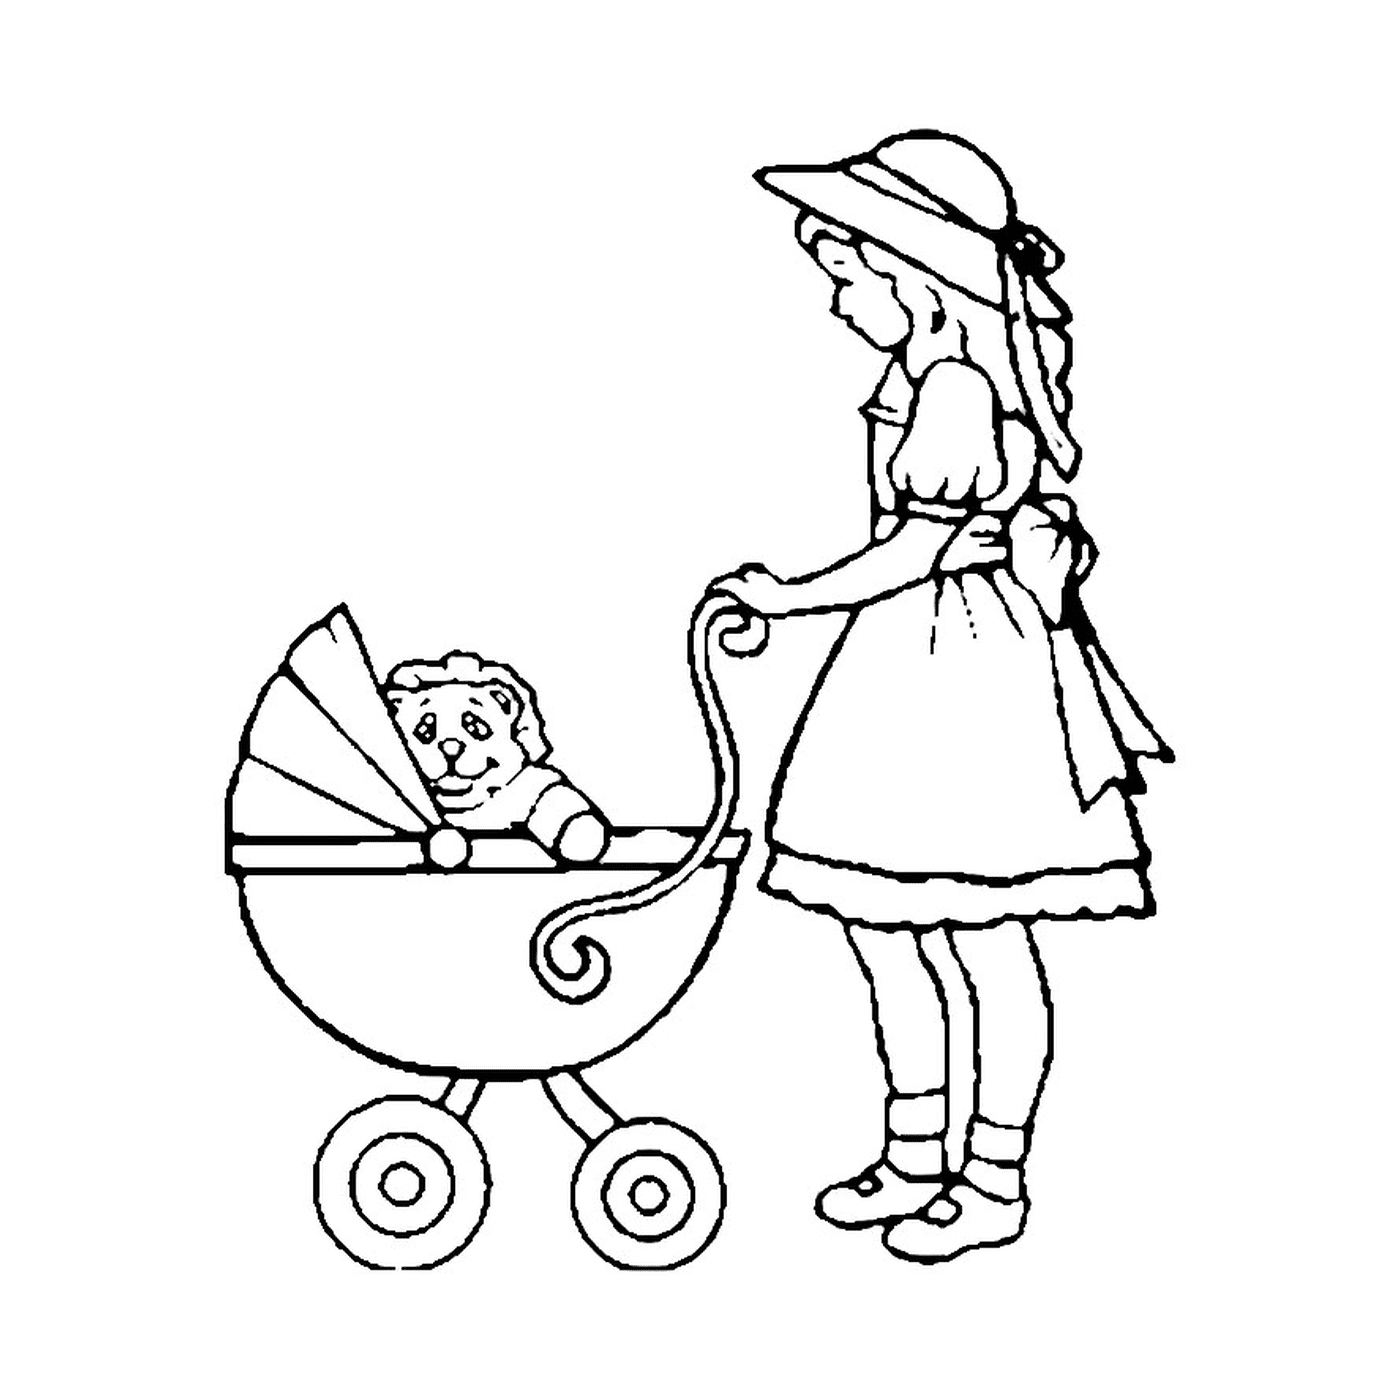  A woman pushing a stroller 